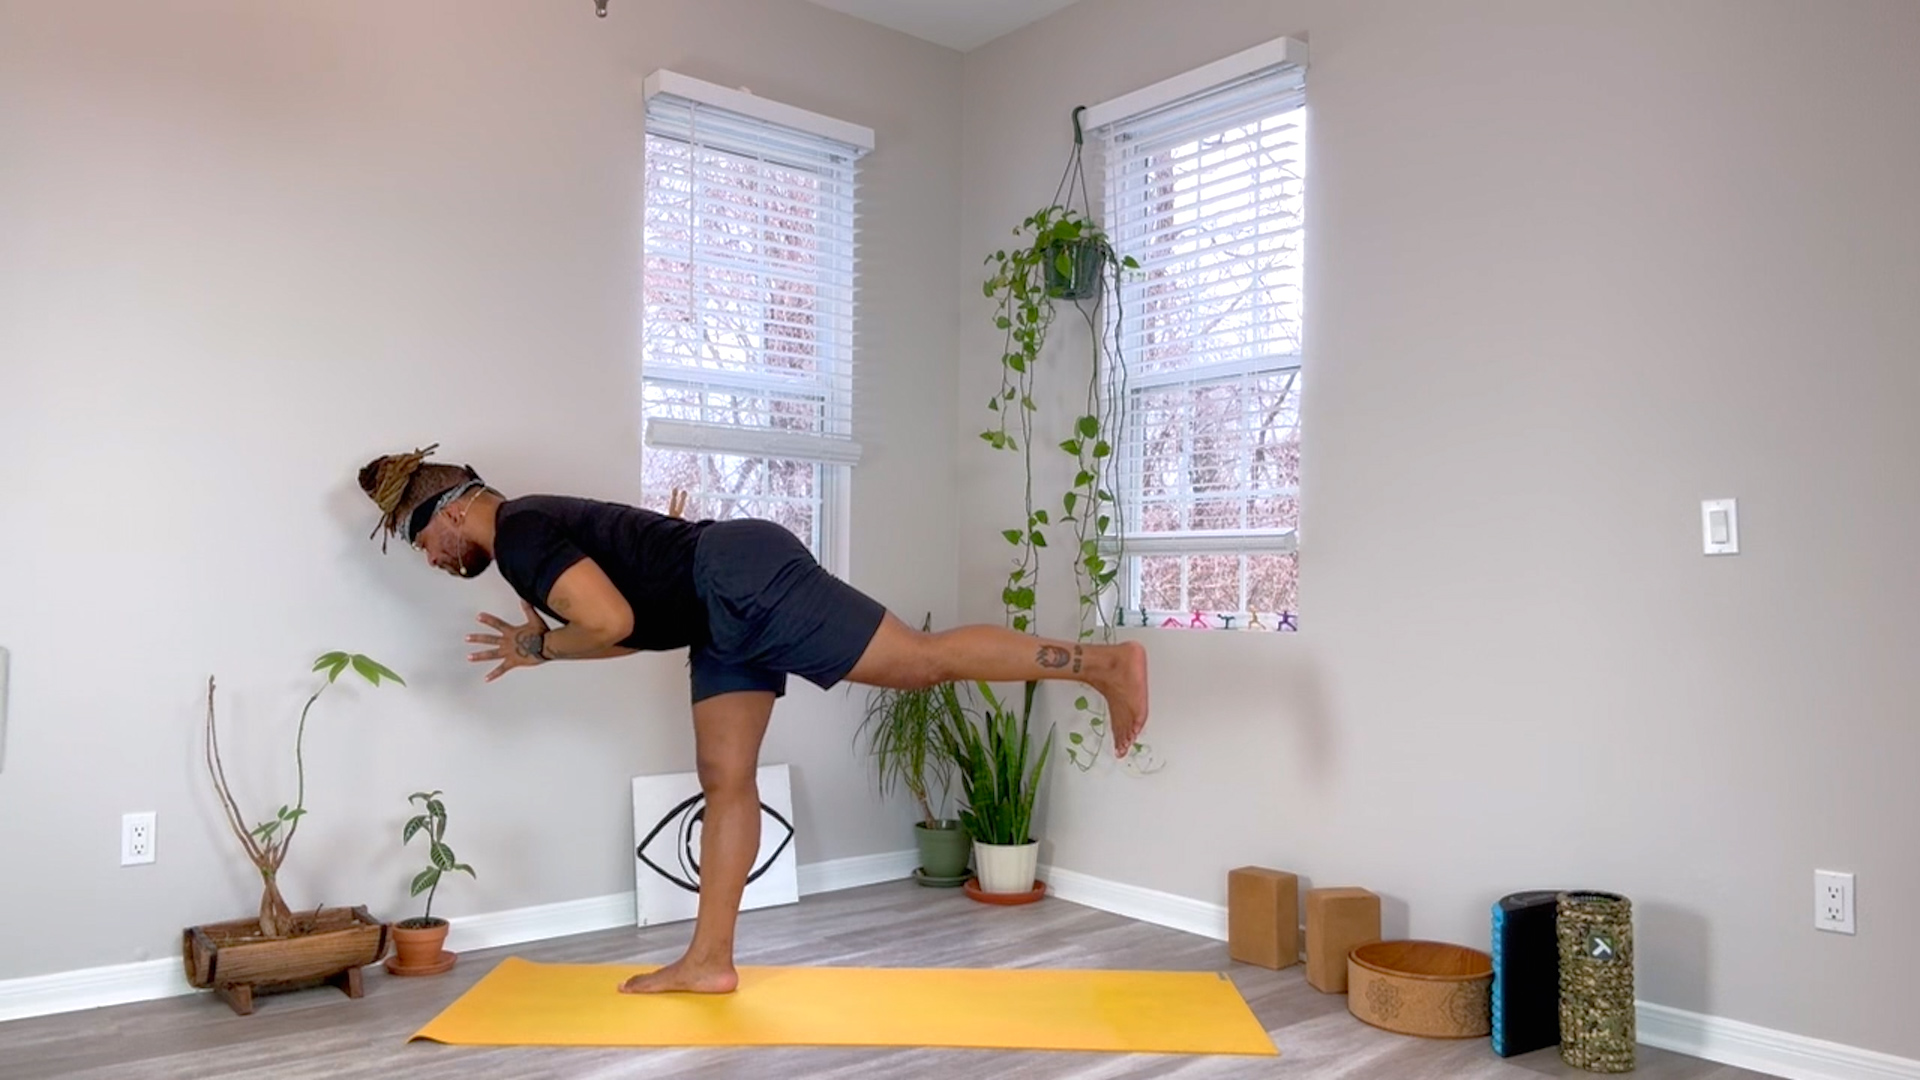 This Black Yoga Instructor Explains How Yoga Can Improve Black Mental Health And Wellness